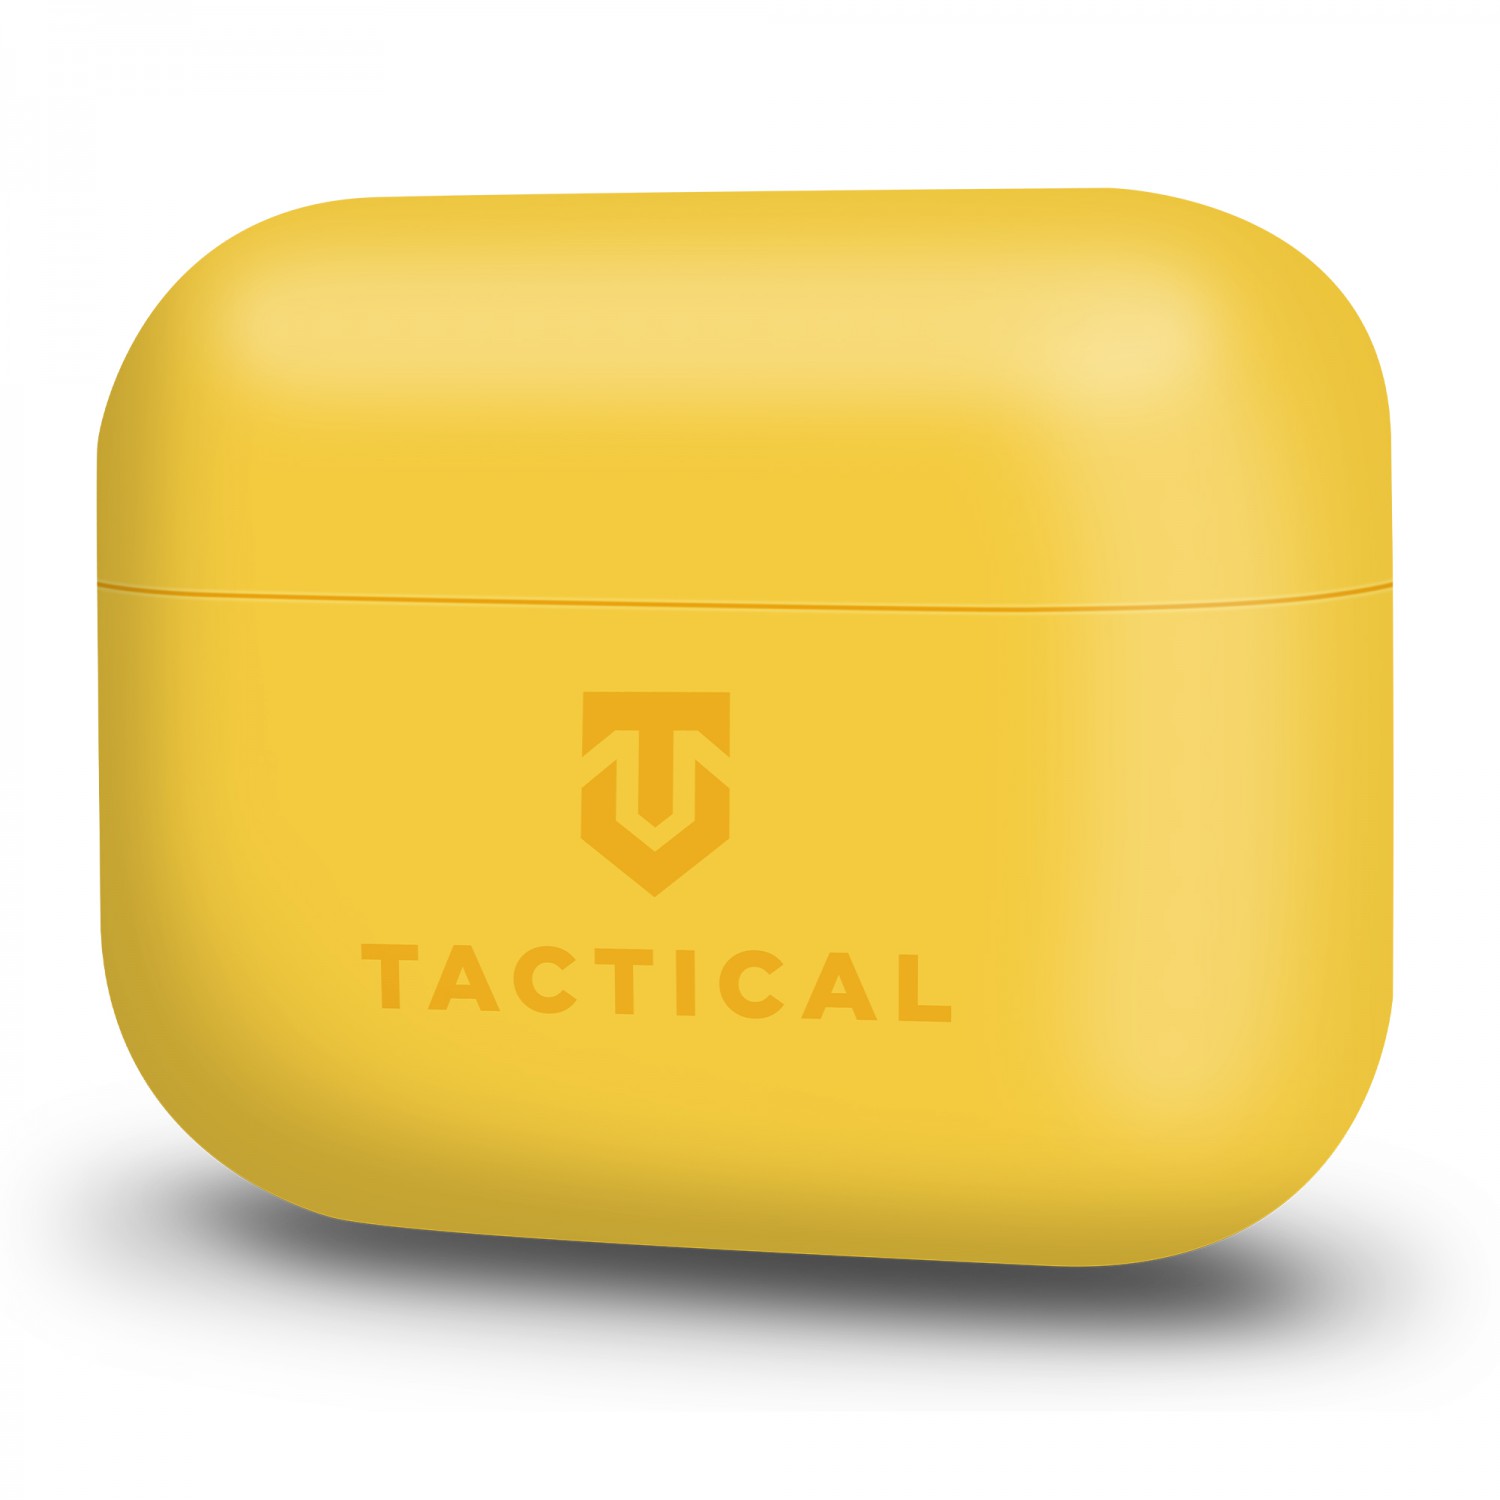 Tactical Velvet Smoothie silikonové pouzdro, obal, kryt Apple AirPods Pro banana